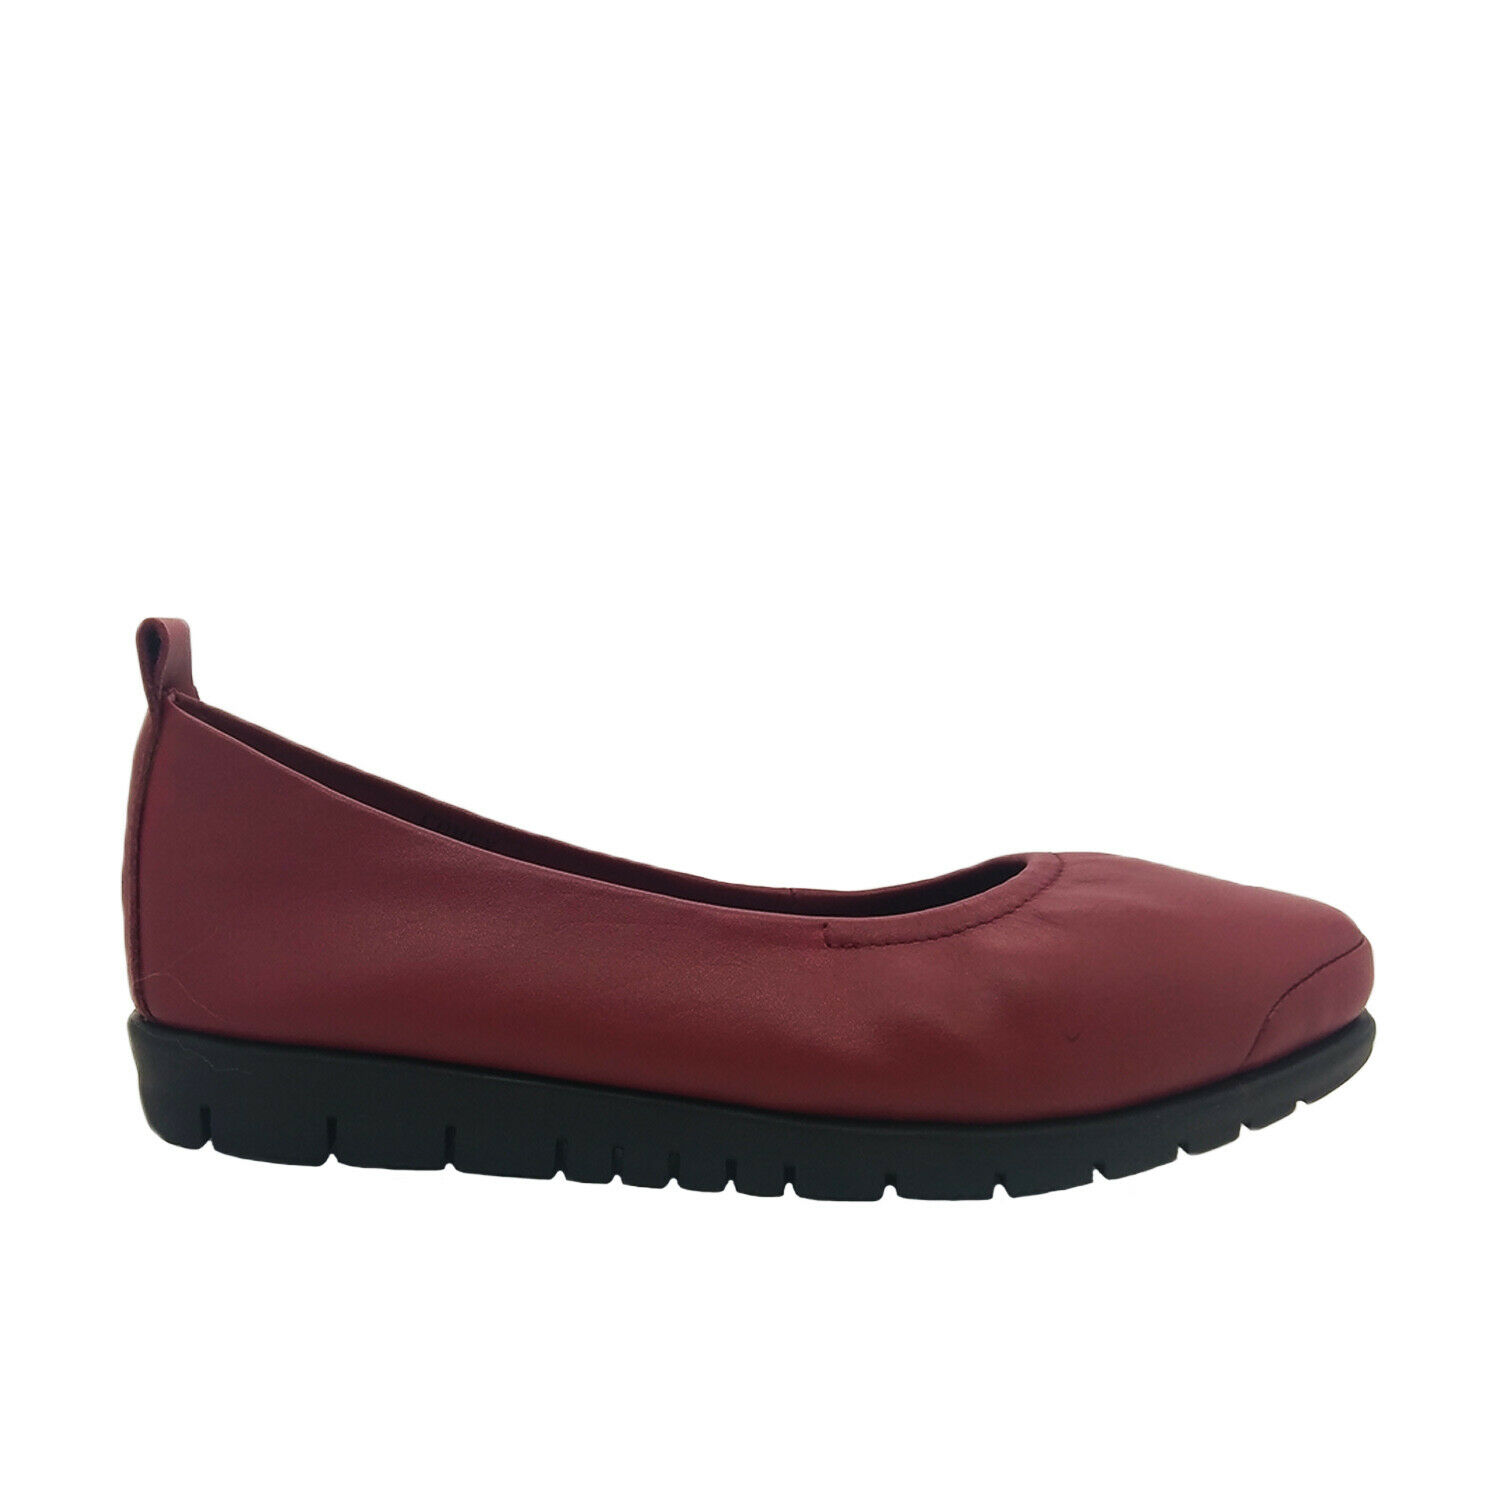 Ladies Shoes Borelli Comfy Leather Ballet Flat Elastic Comfort Soft ...